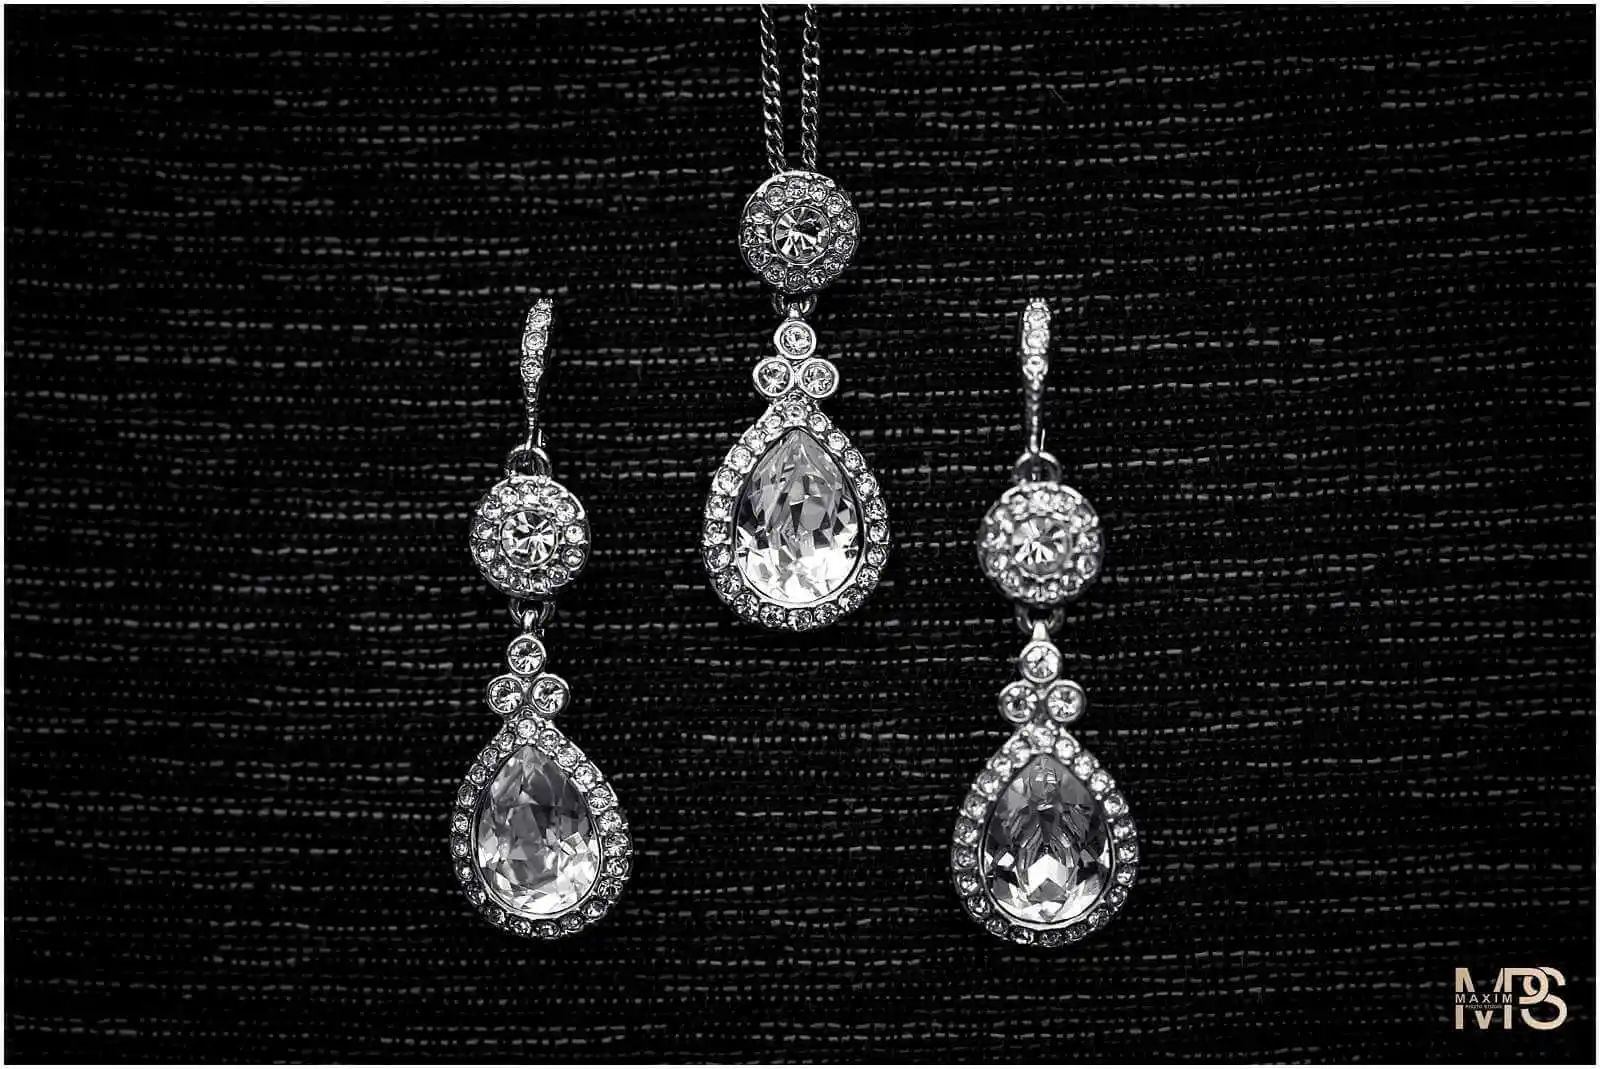 Elegant diamond necklace and earrings set on black background.